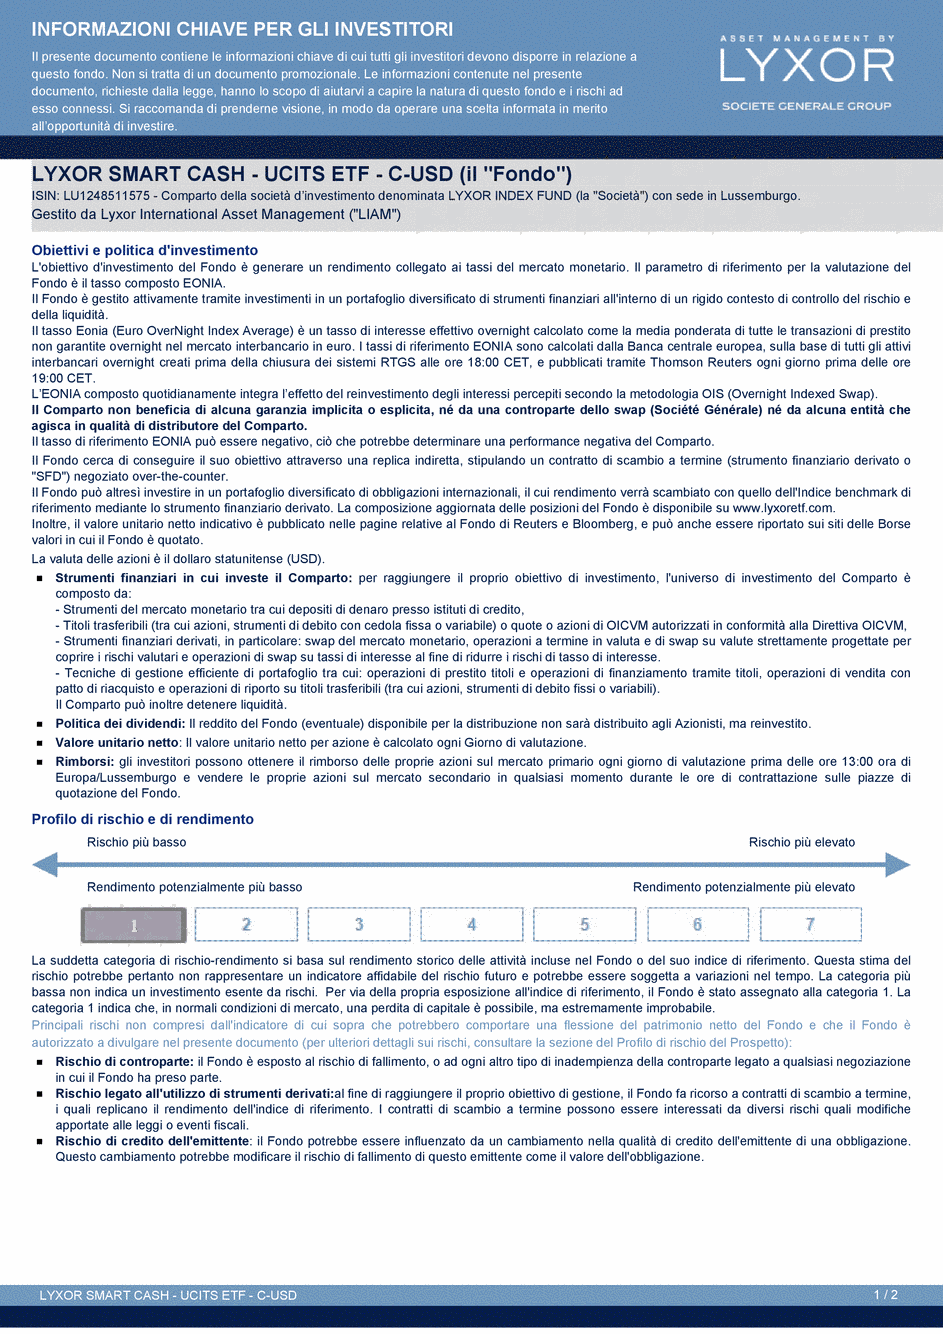 DICI Lyxor Smart Overnight Return - UCITS ETF C-USD - 30/06/2015 - Italien